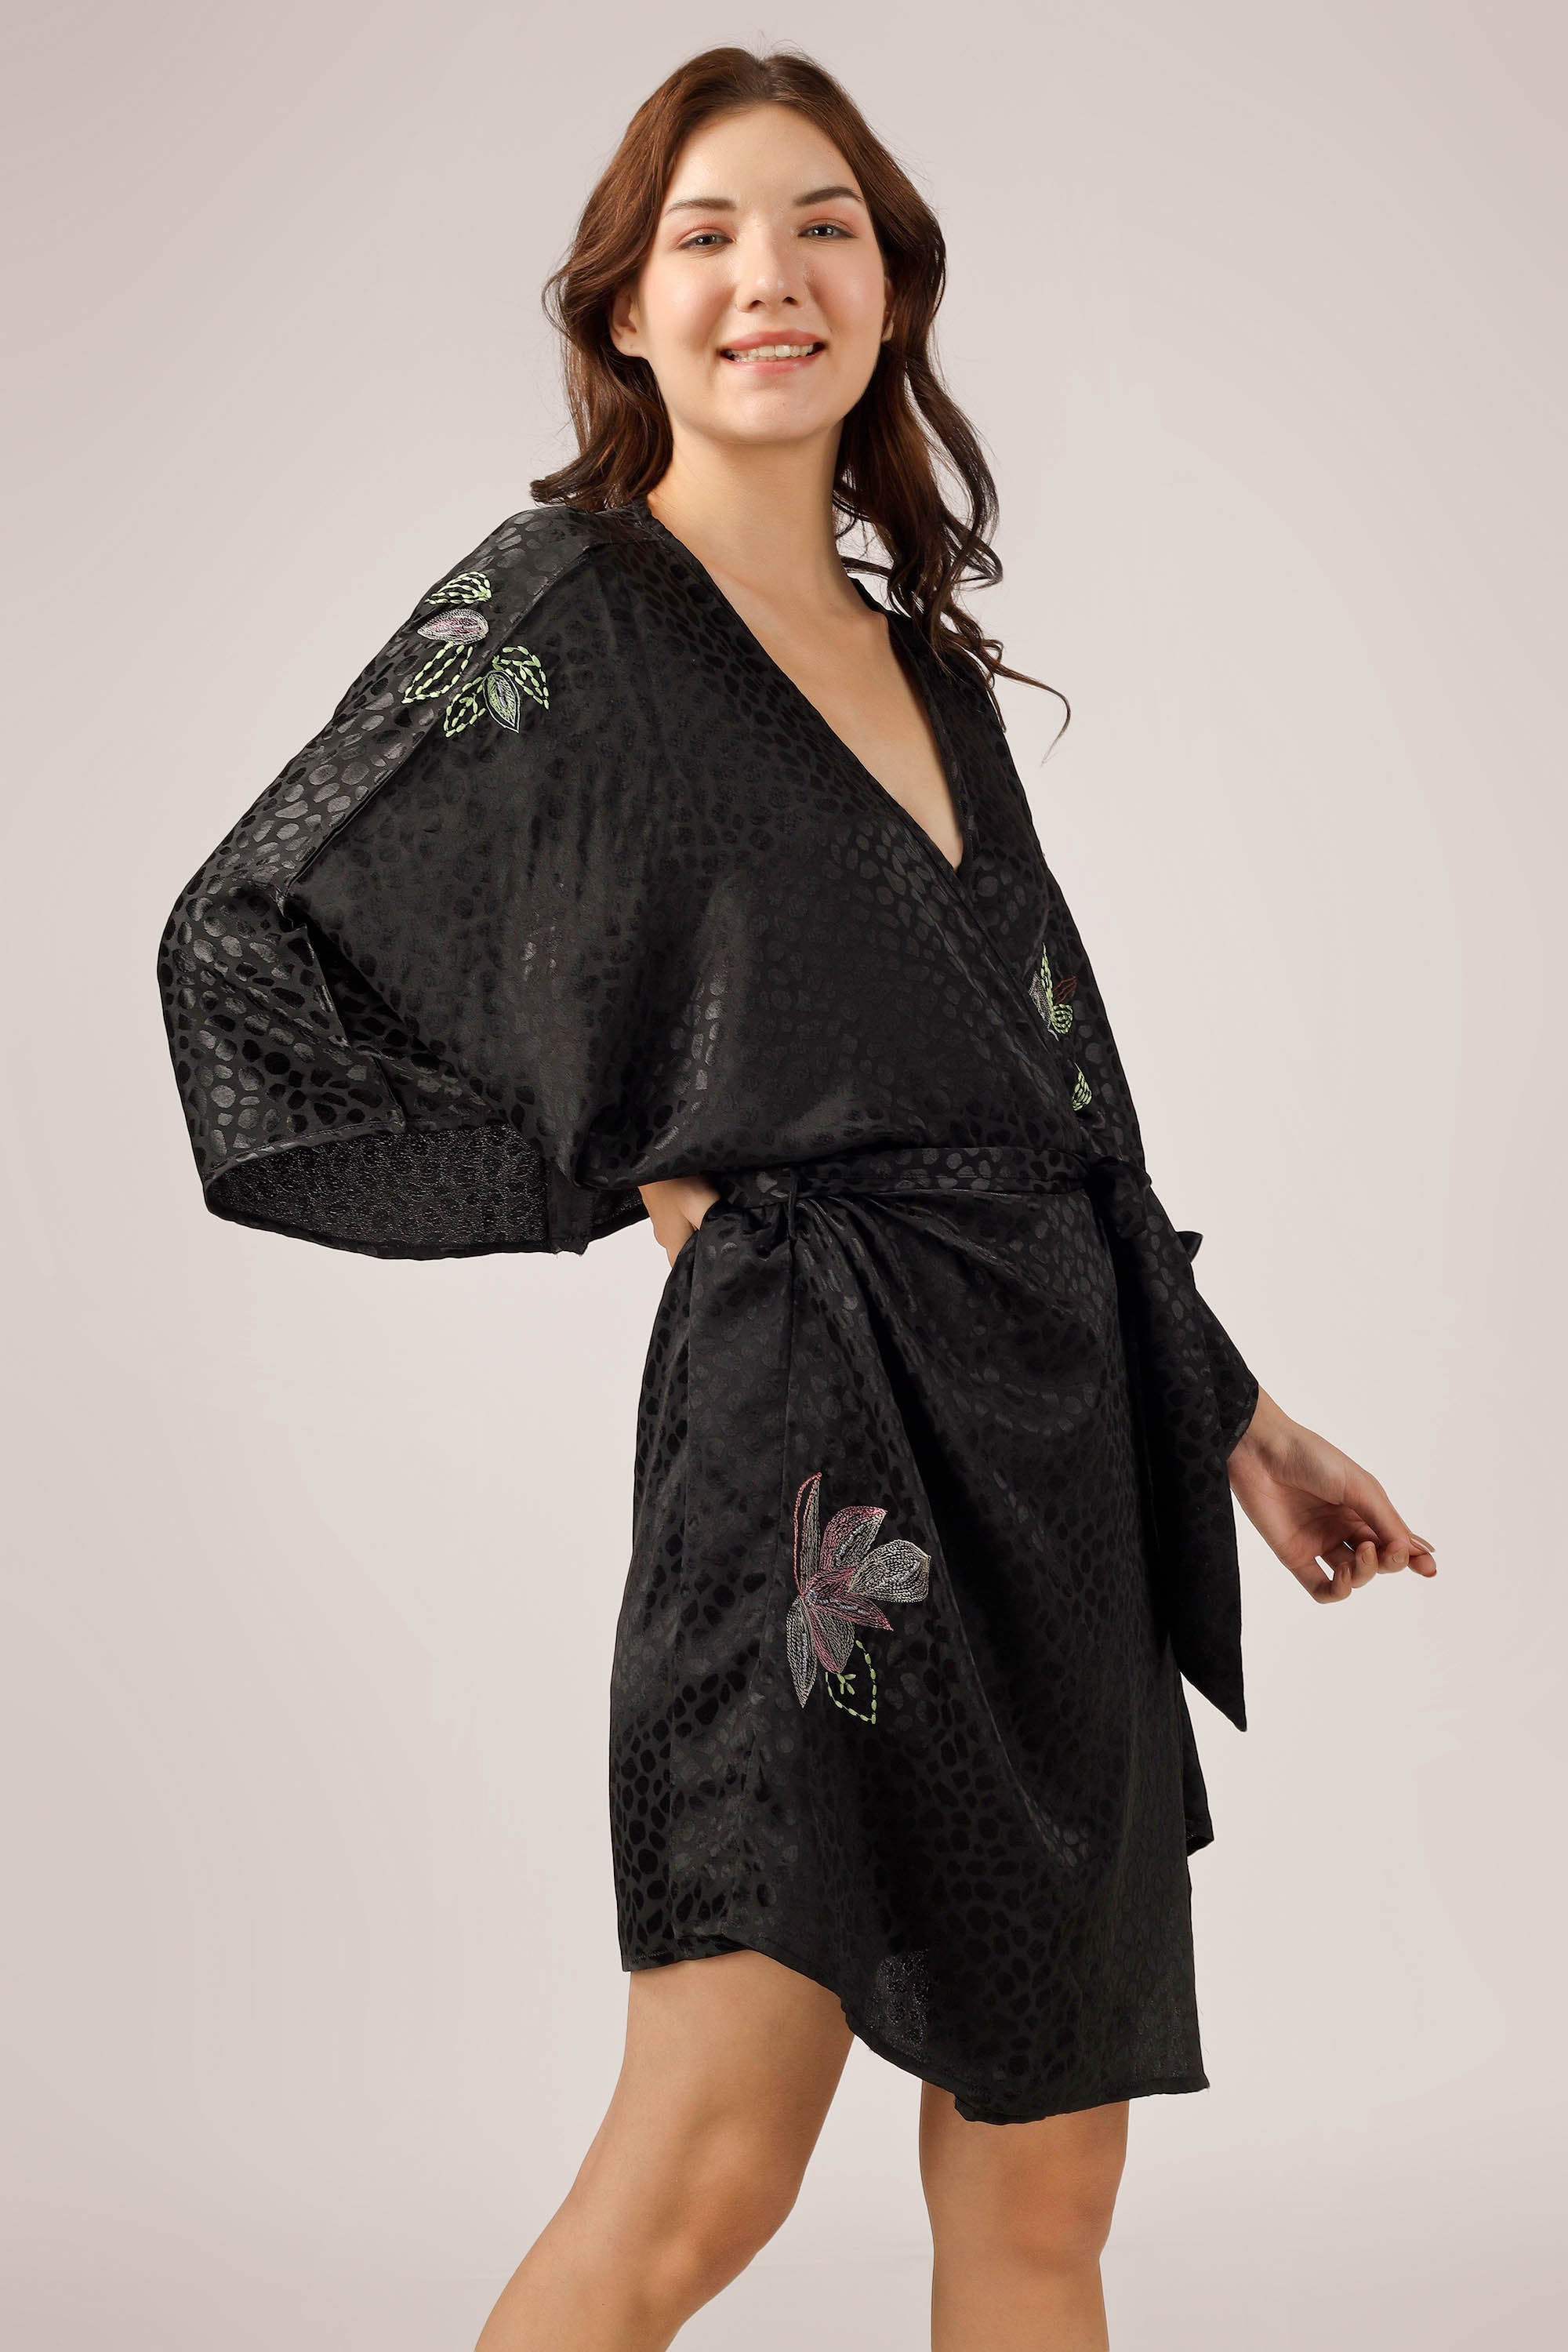 Swan Queen French lace kimono robe in Black – GirlandaSeriousDream.com